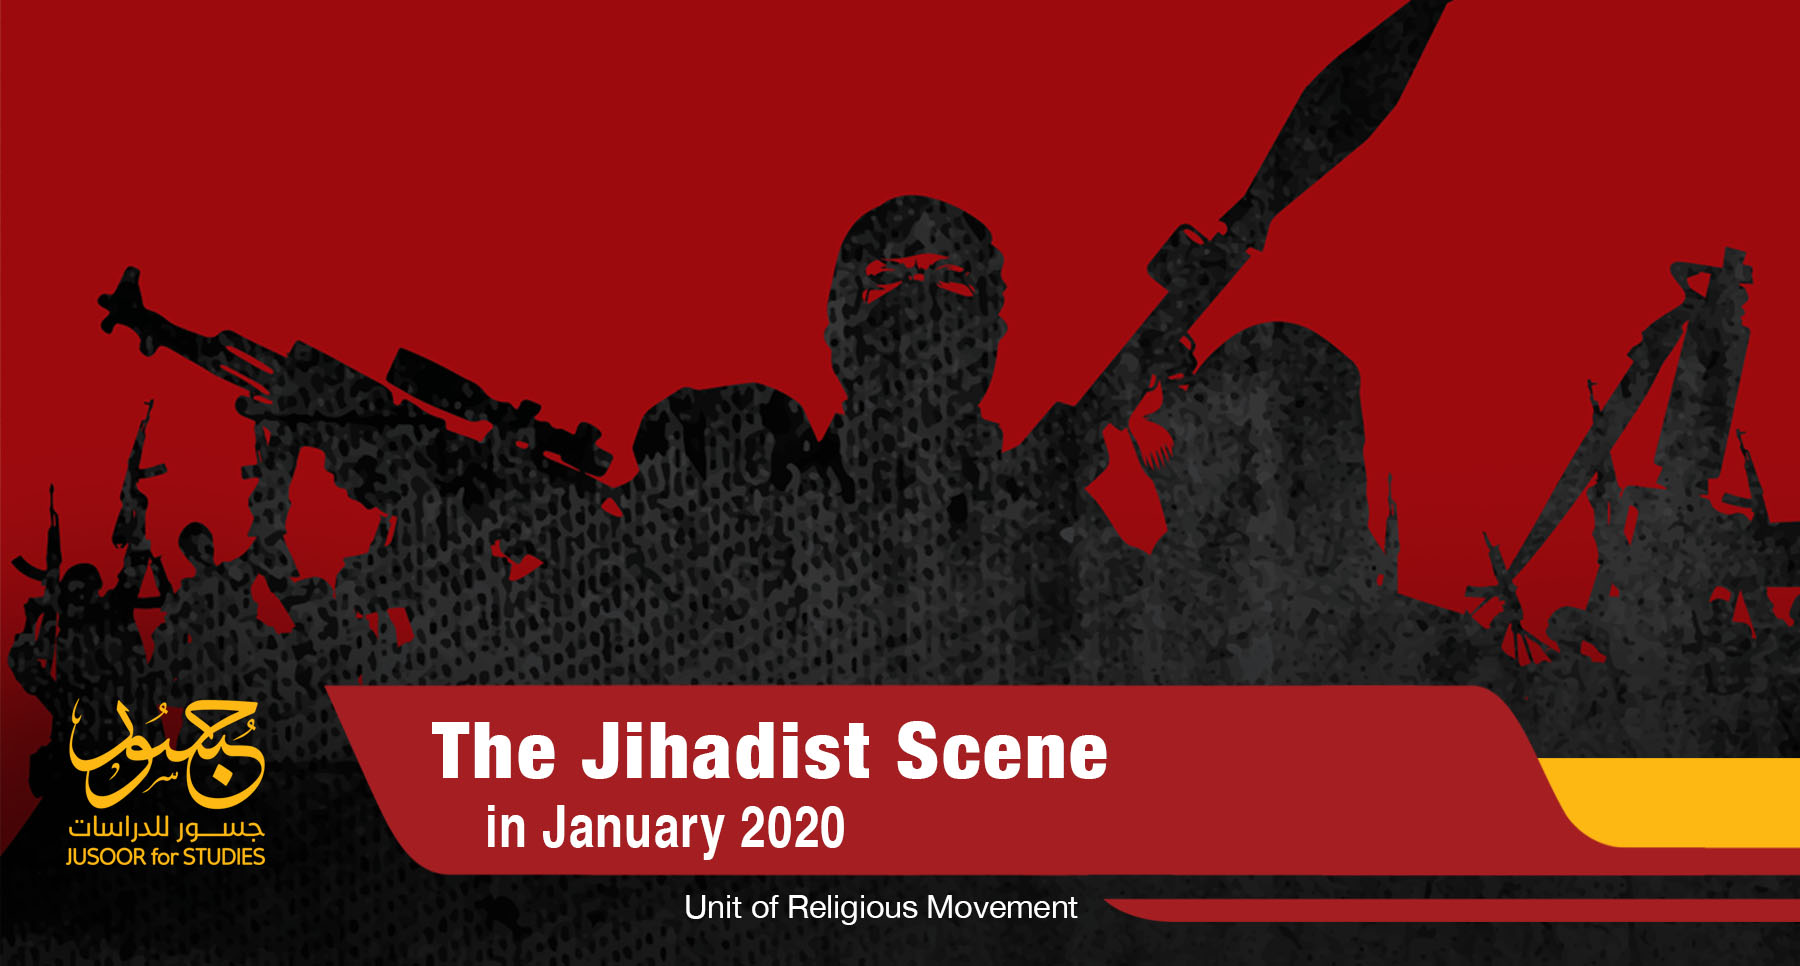 The Jihadist Scene in January 2020